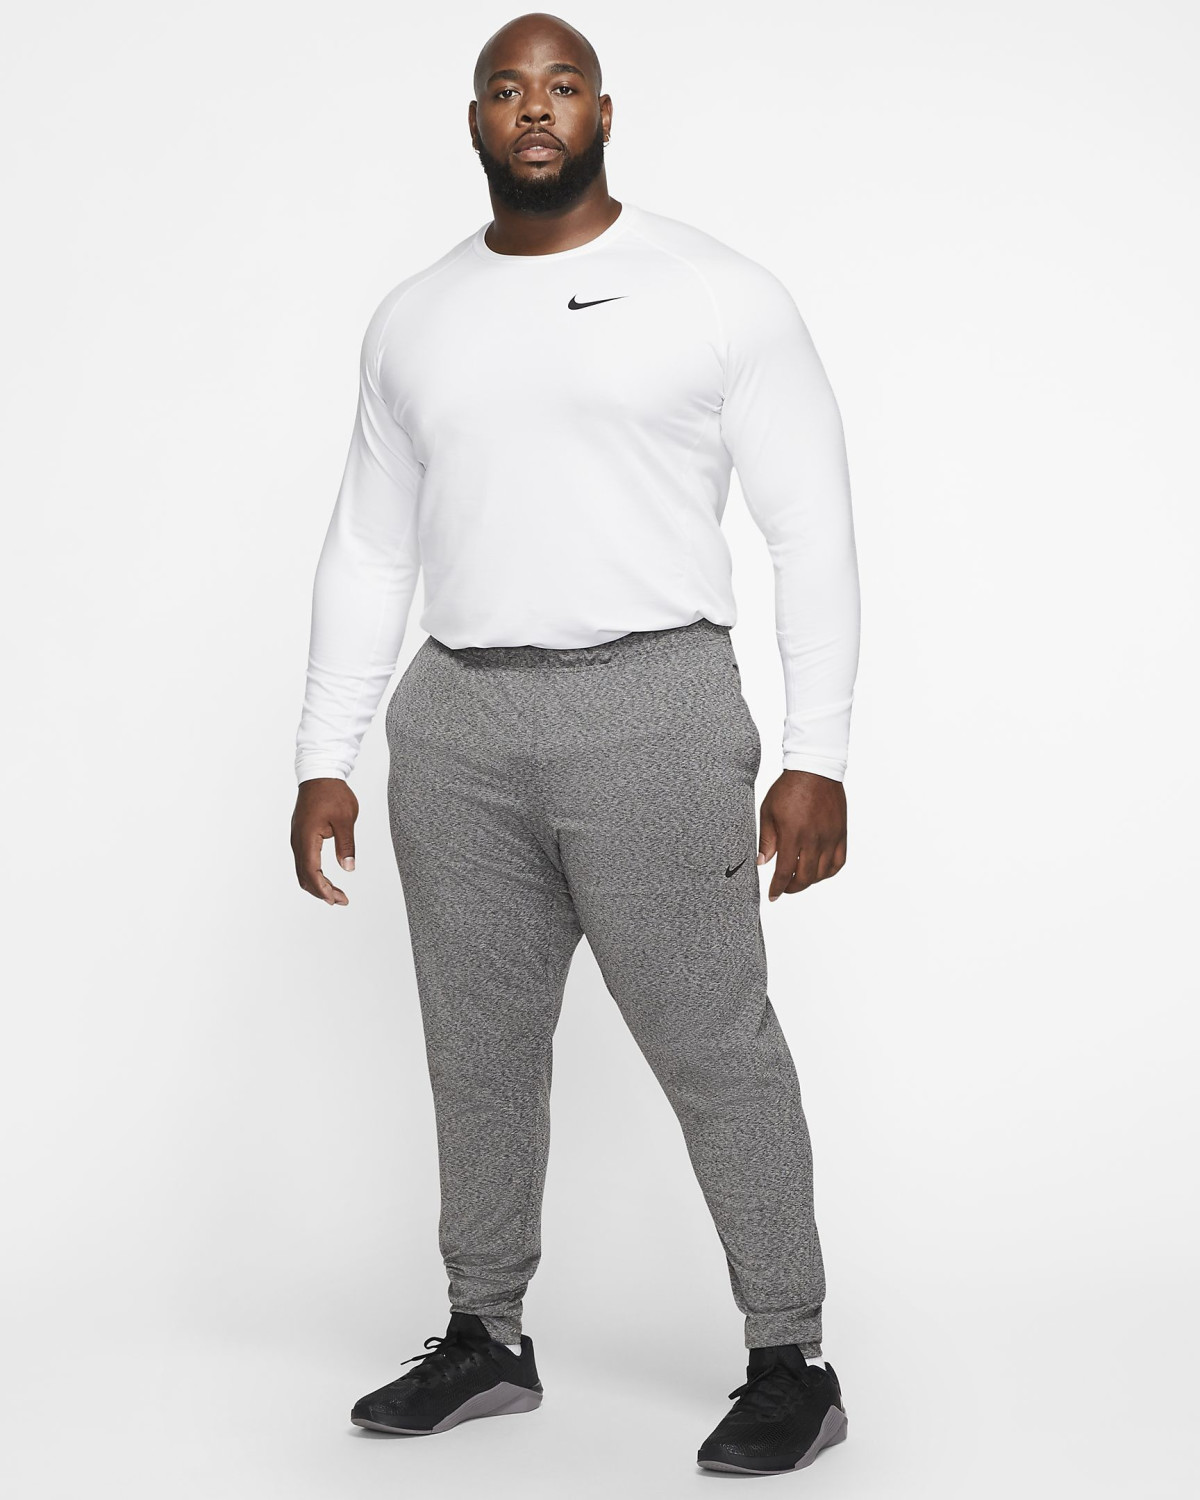 Buy Nike Dri-FIT Men's Yoga Trousers black/htr/black from £29.00 (Today ...